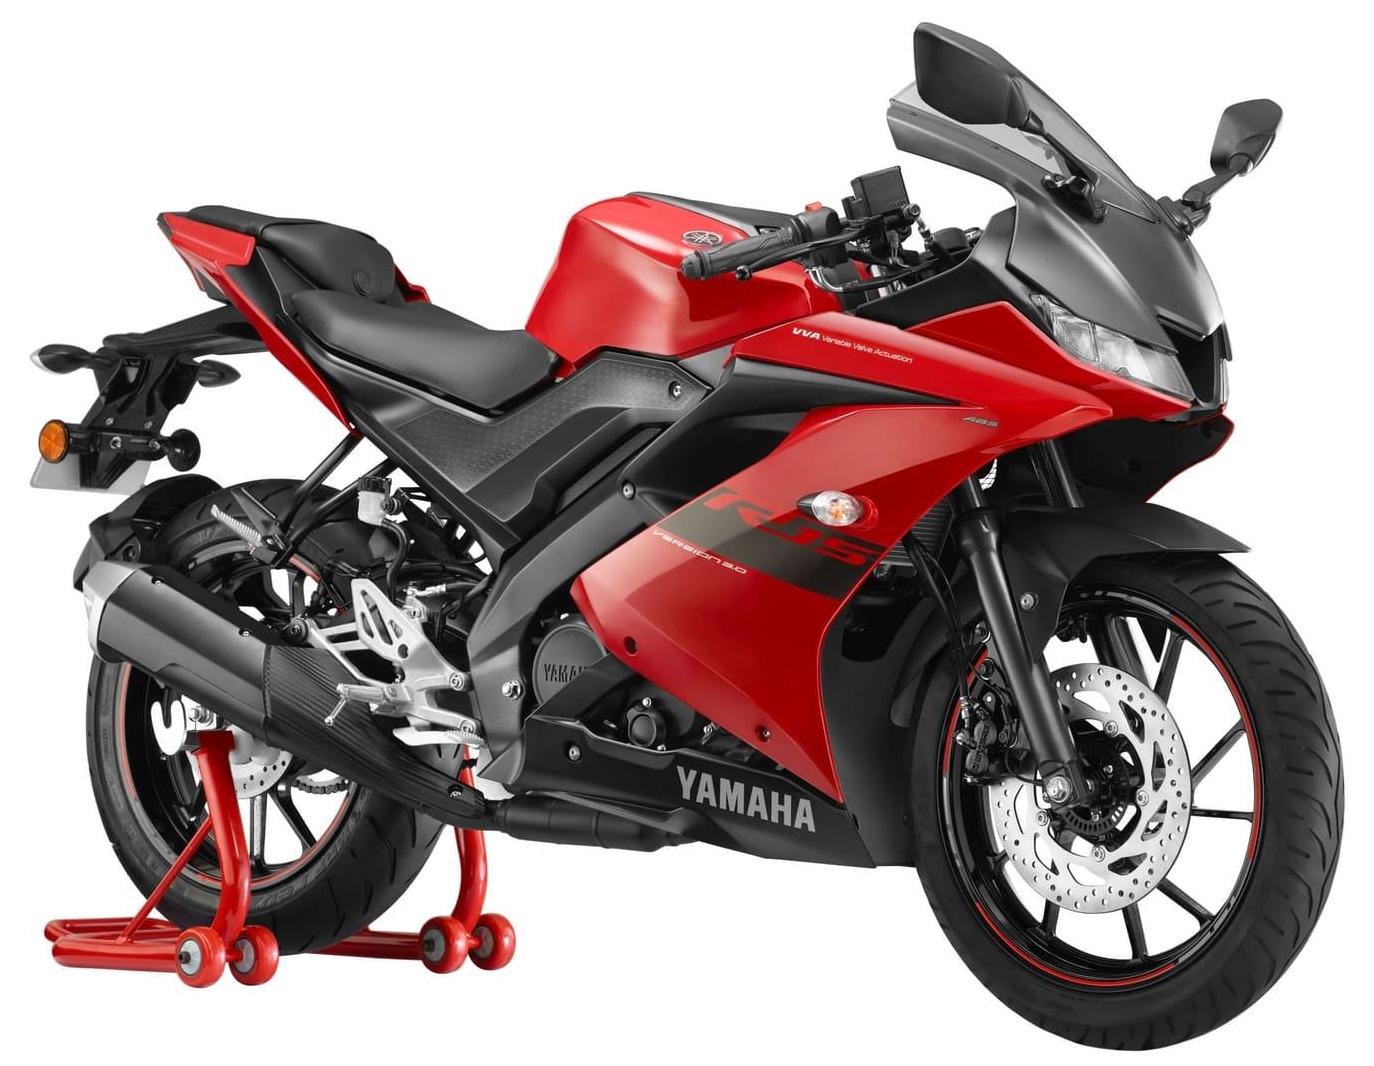 Yamaha R15 V3 in Metallic Red